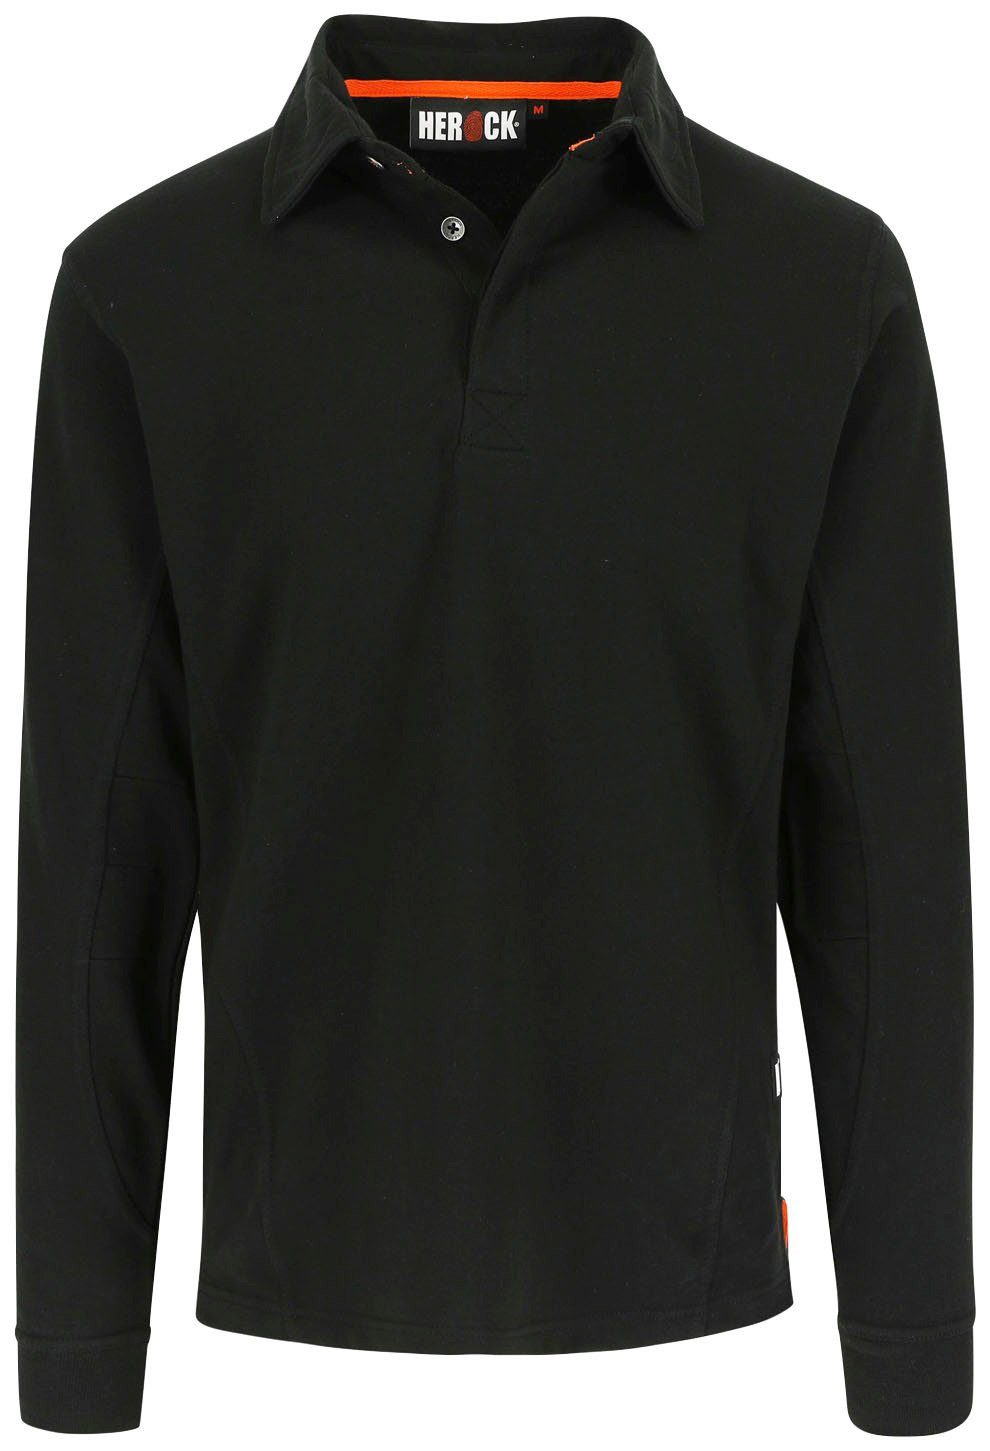 Herock Langarm-Poloshirt Troja Polo Langärmlig Angenehmes Tragegefühl, leicht figurformend, verschiedene Farben schwarz